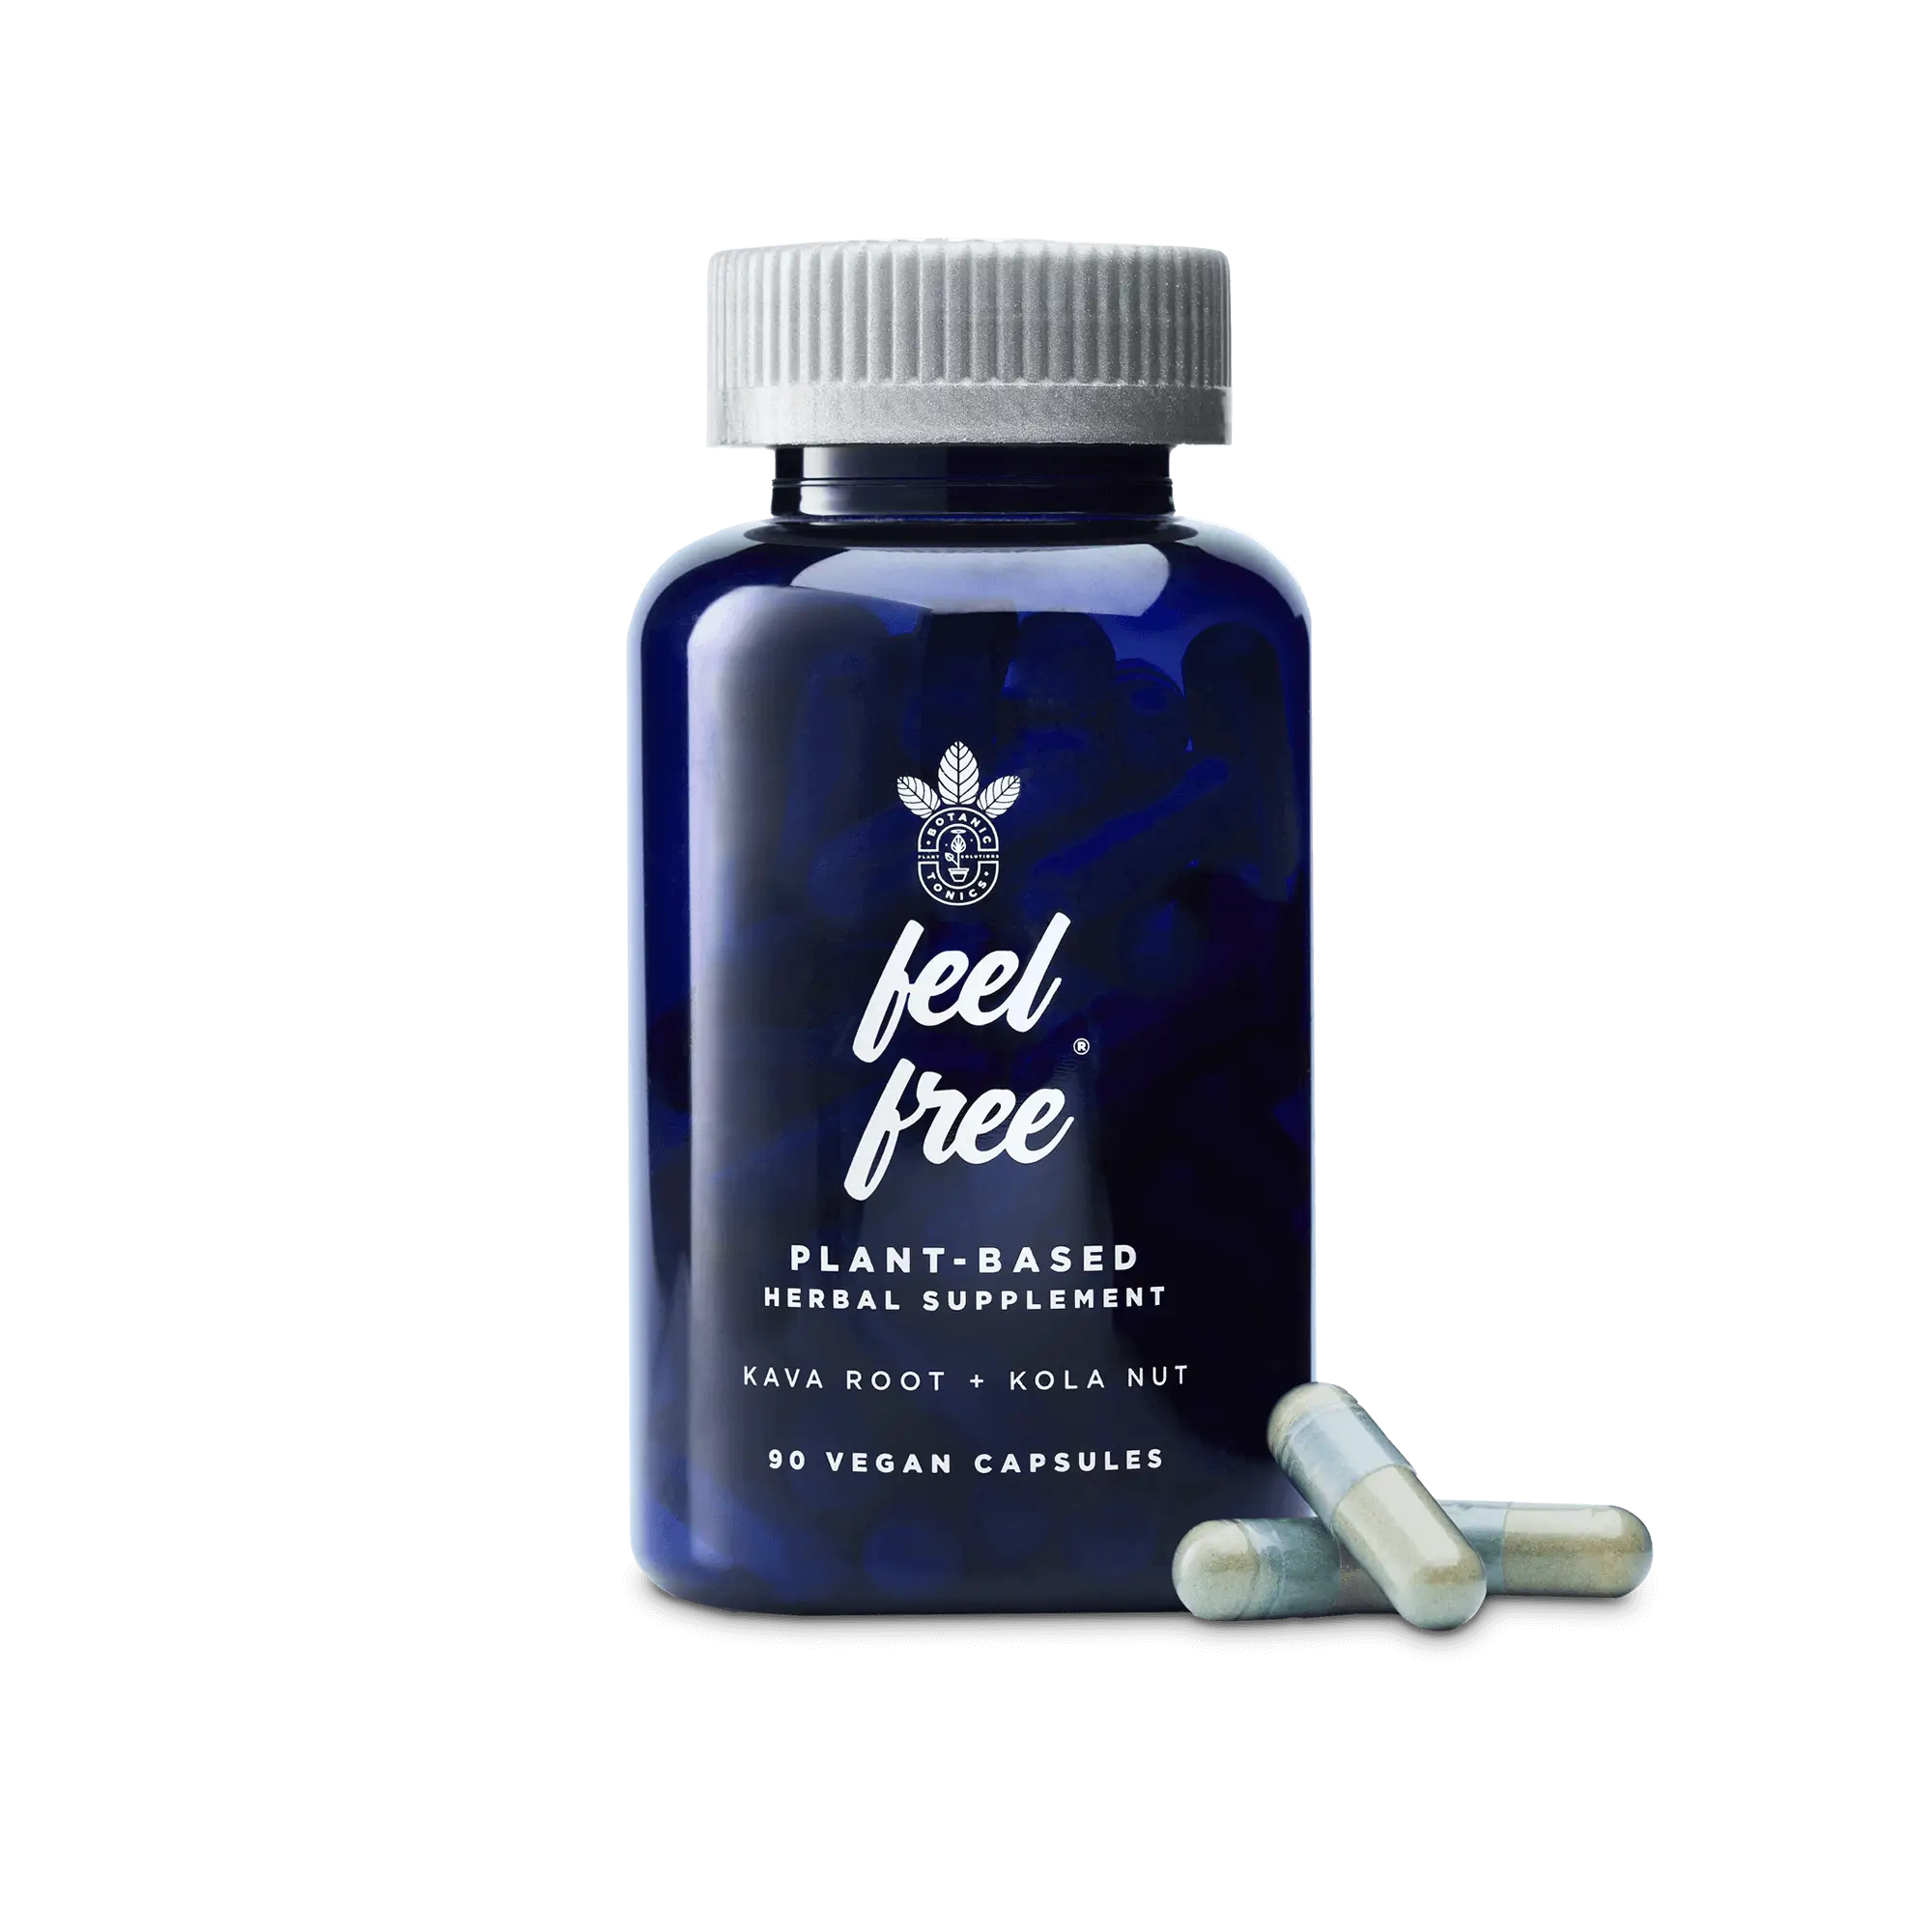 feel free capsules - 90ct bottle